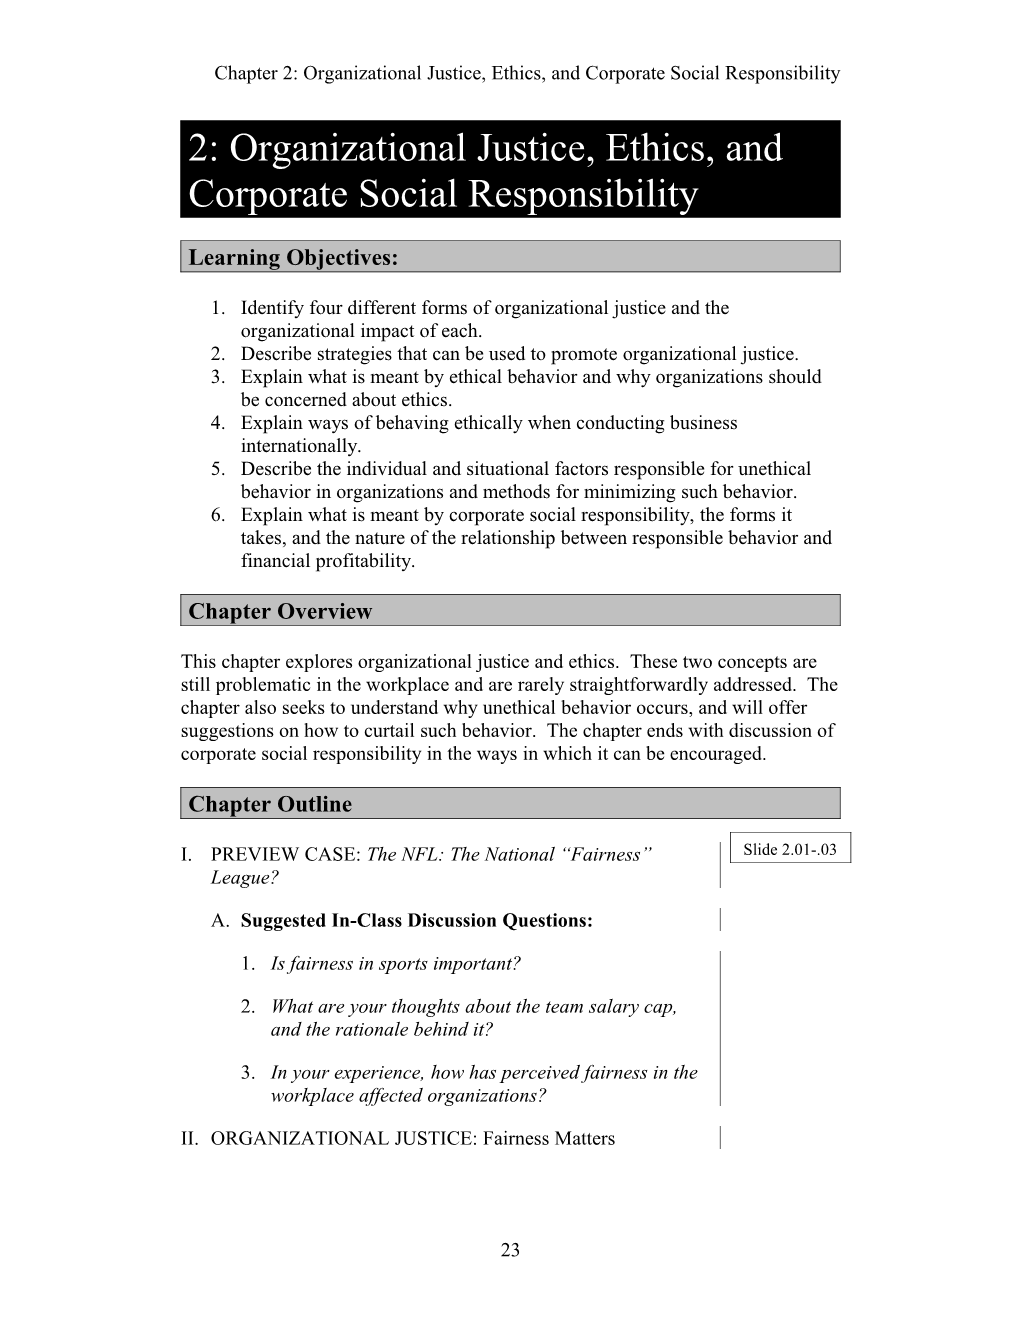 2: Organizational Justice, Ethics, & CSR